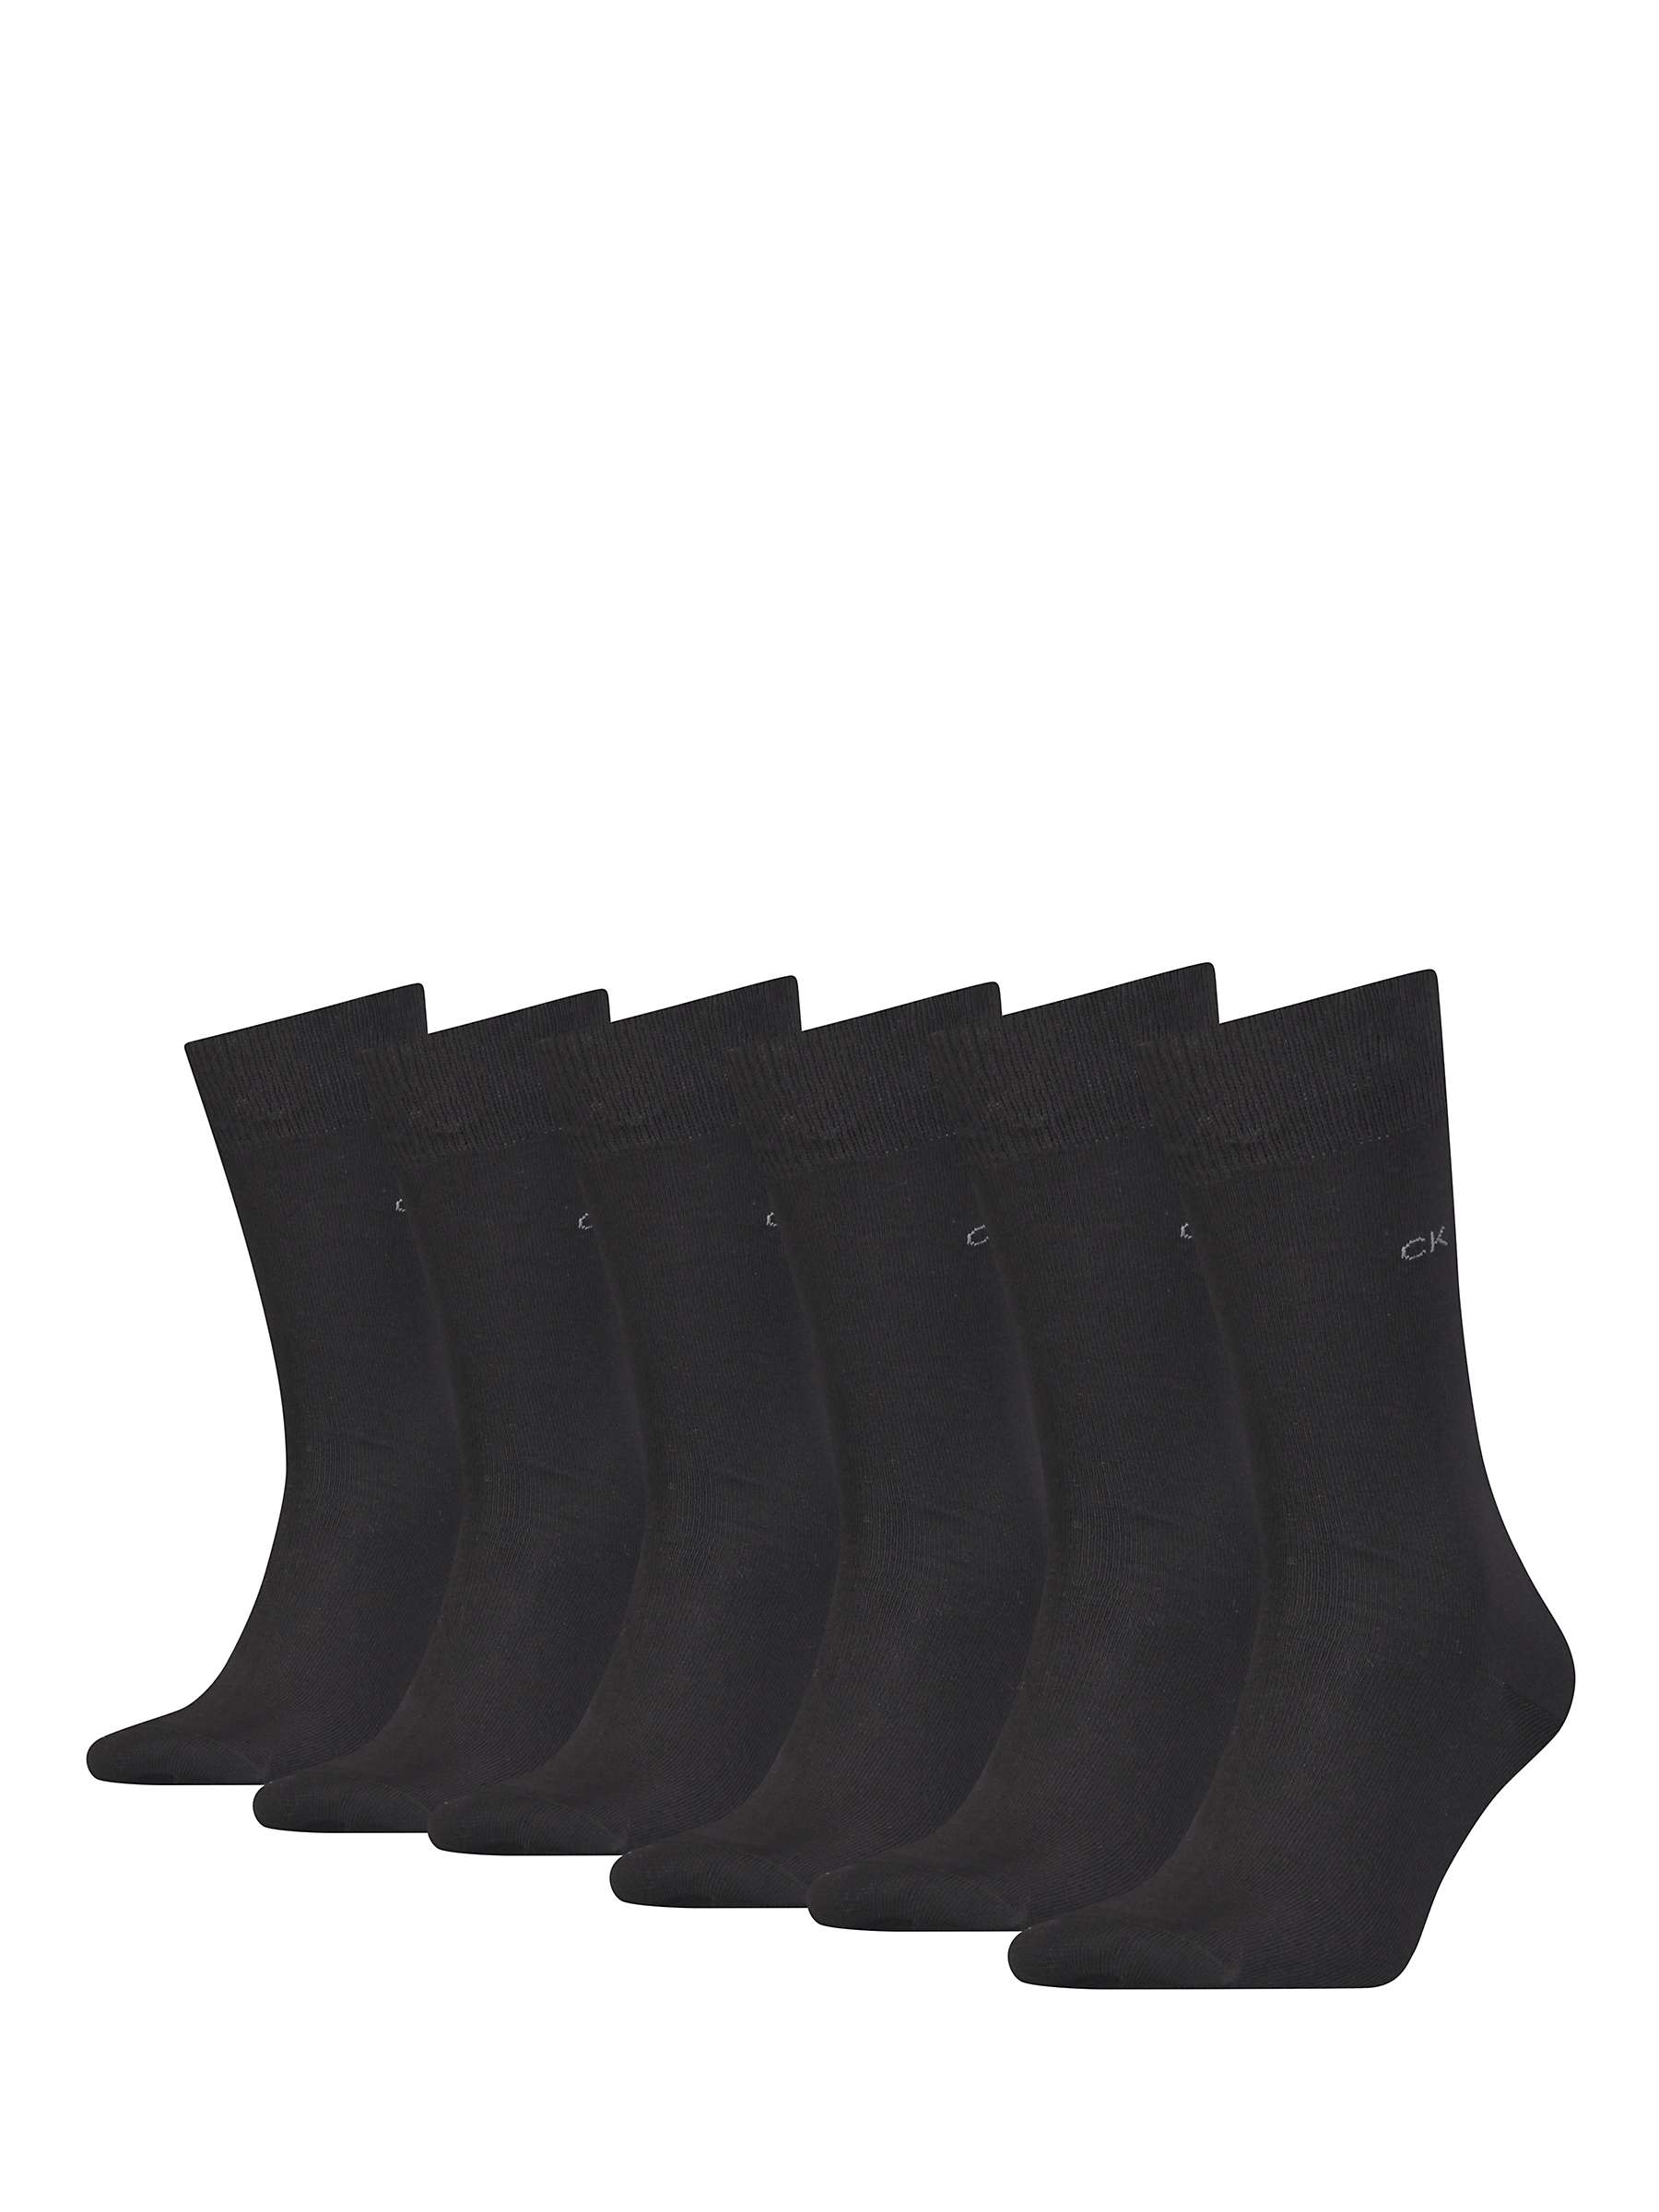 Buy Calvin Klein Logo Ankle Socks, One Size, Pack of 6, 001 Black Online at johnlewis.com